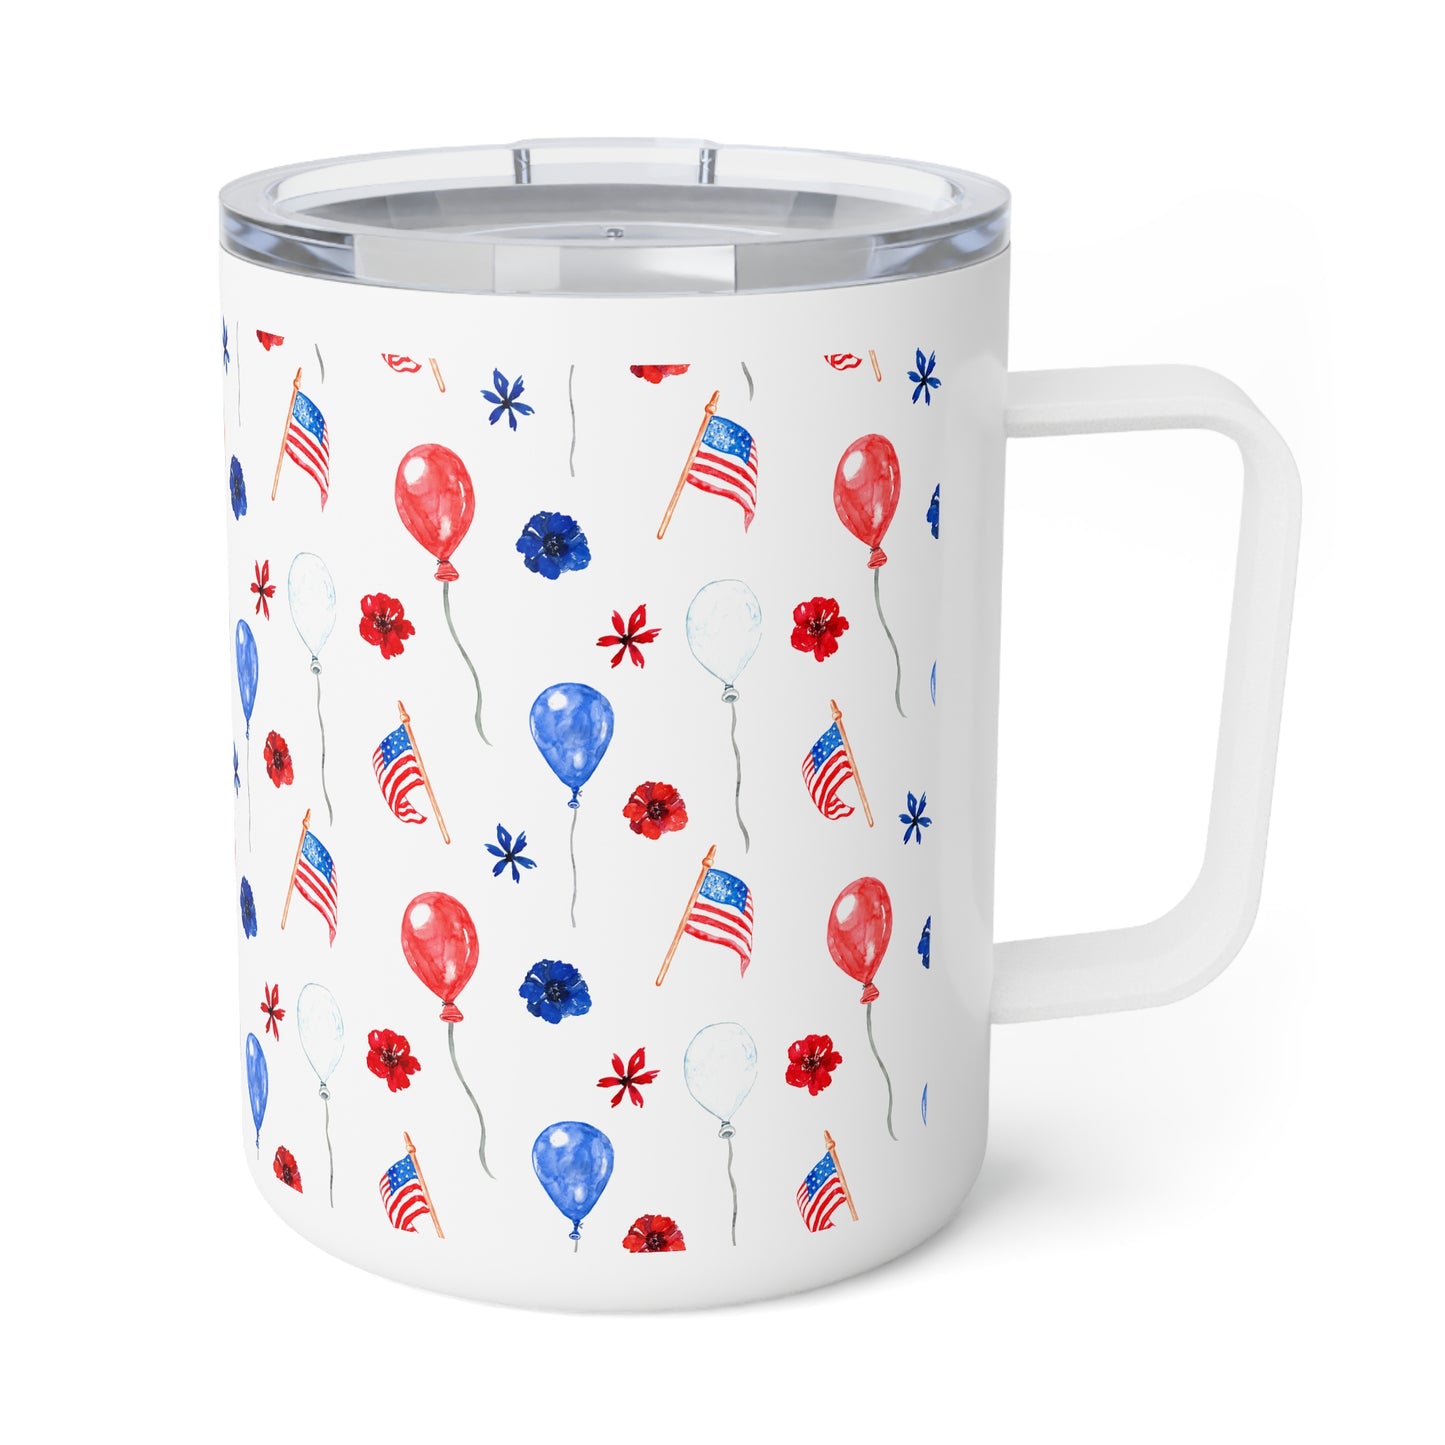 American Flags and Balloons Insulated Coffee Mug, 10oz